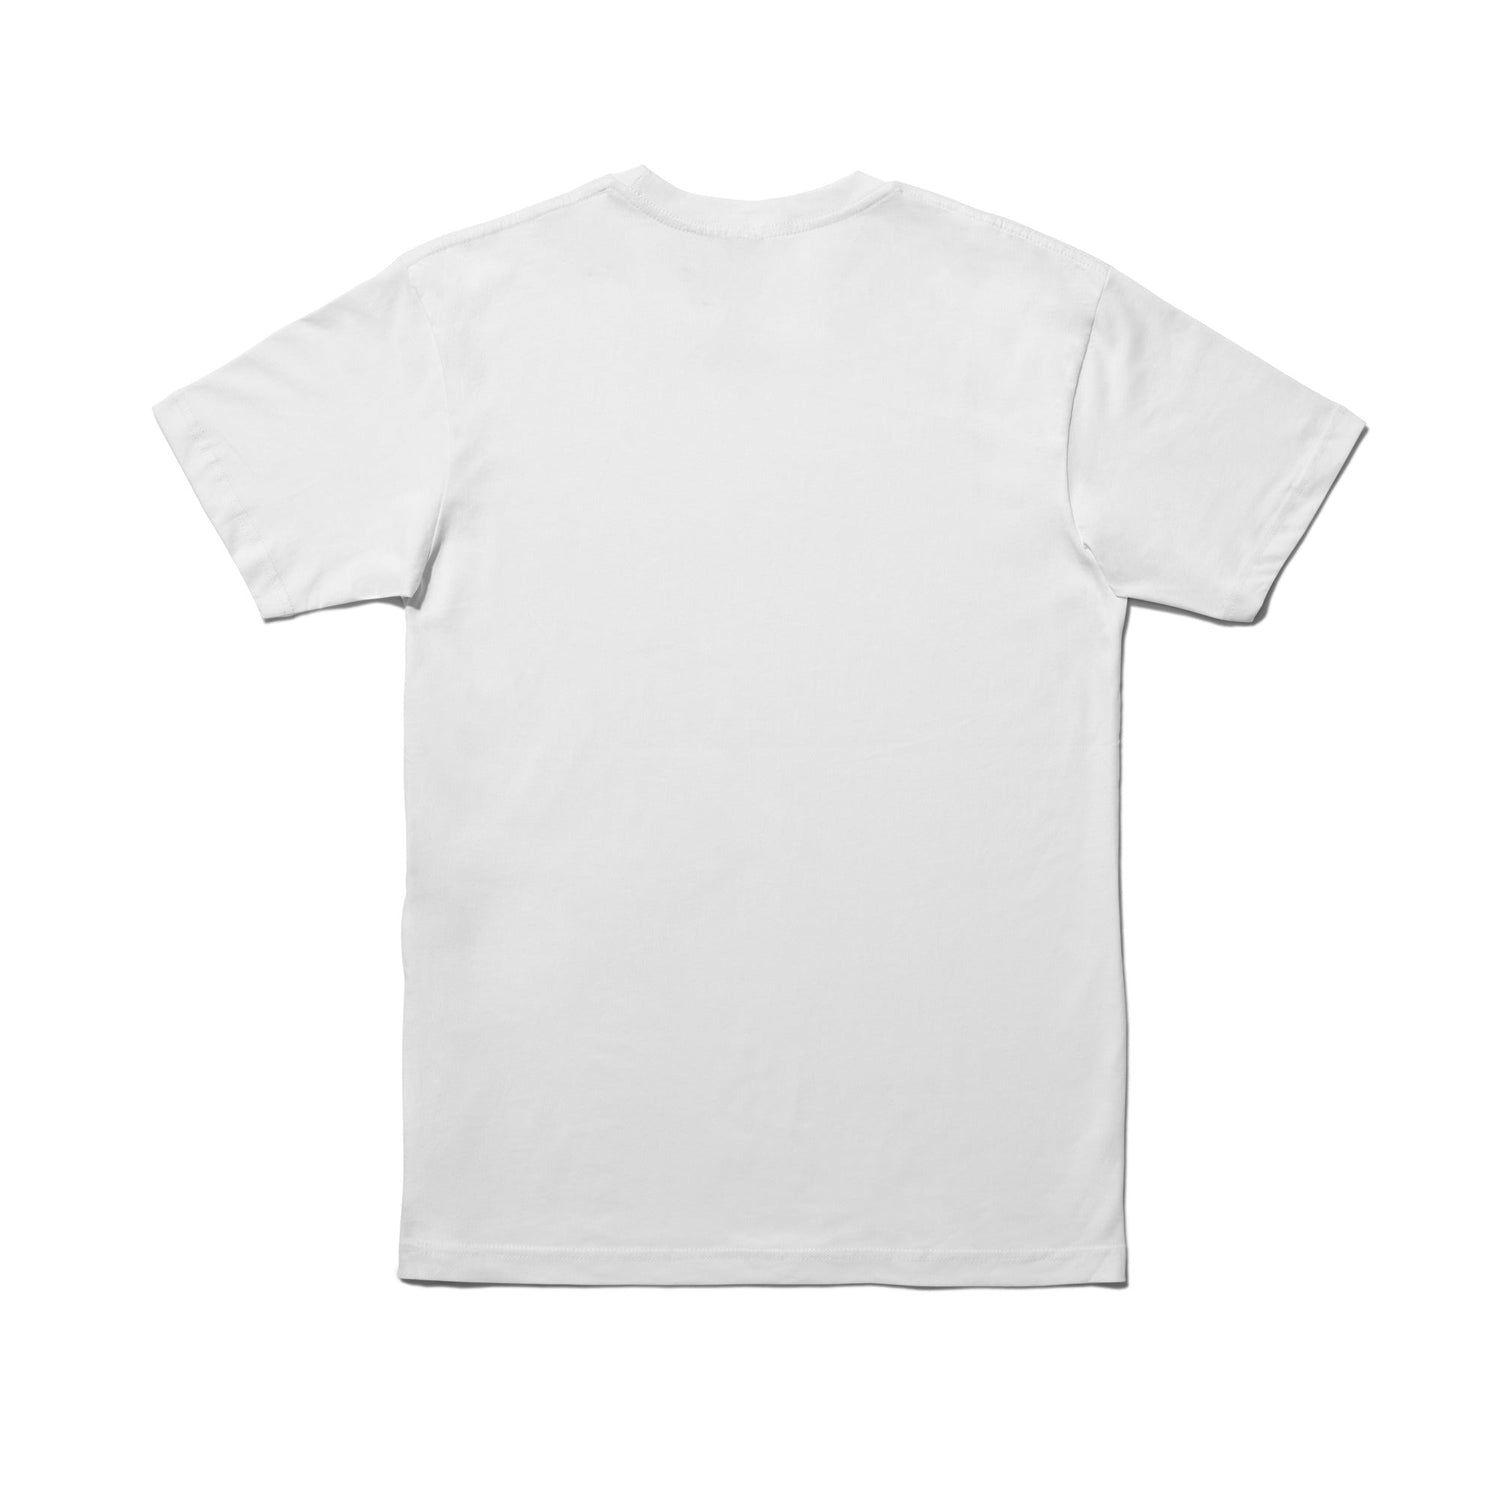 T-shirt blanc Ankle Biter de Stance